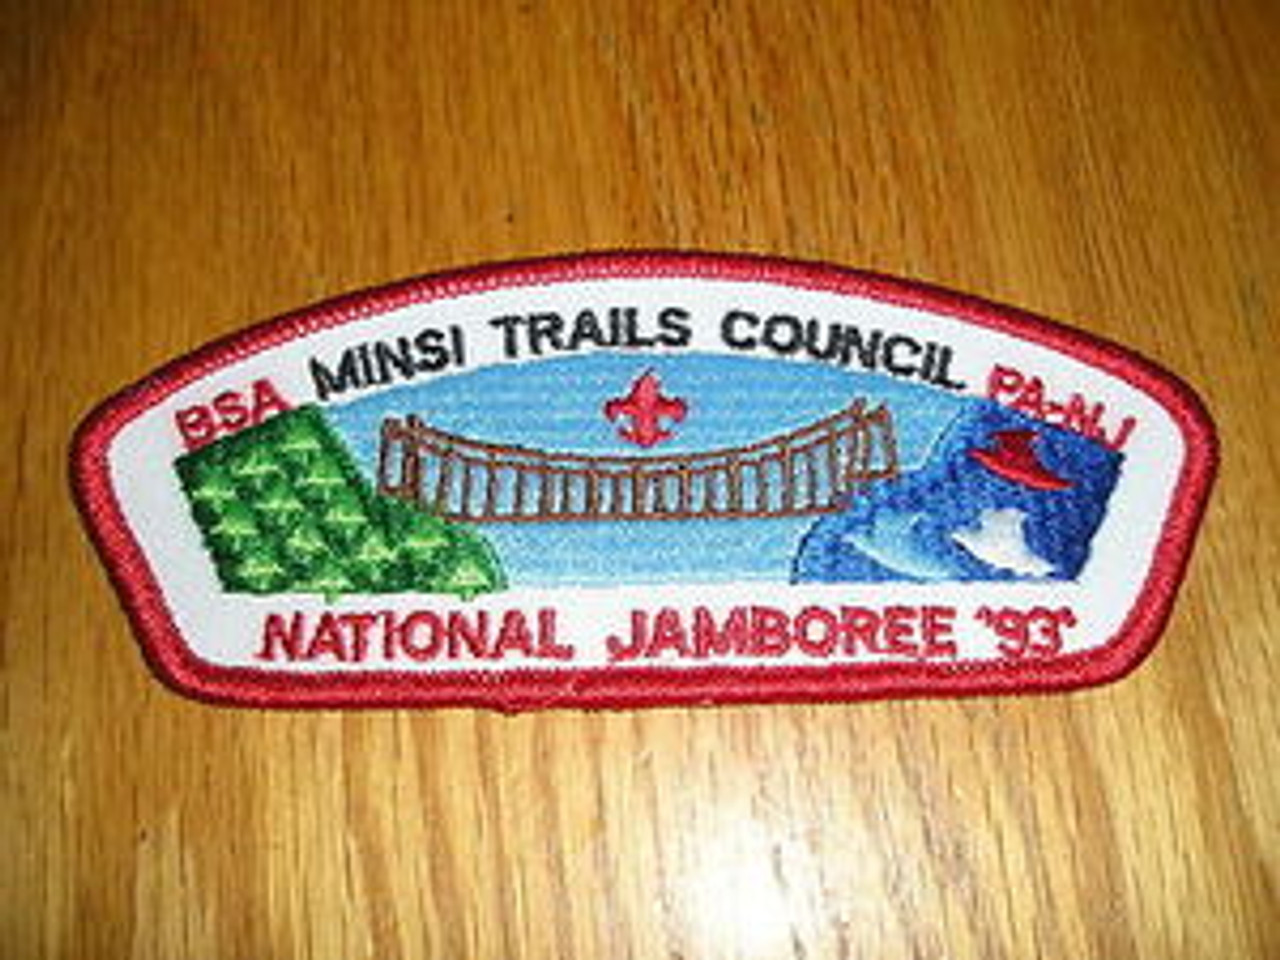 1993 National Jamboree JSP - Minsi Trails Council